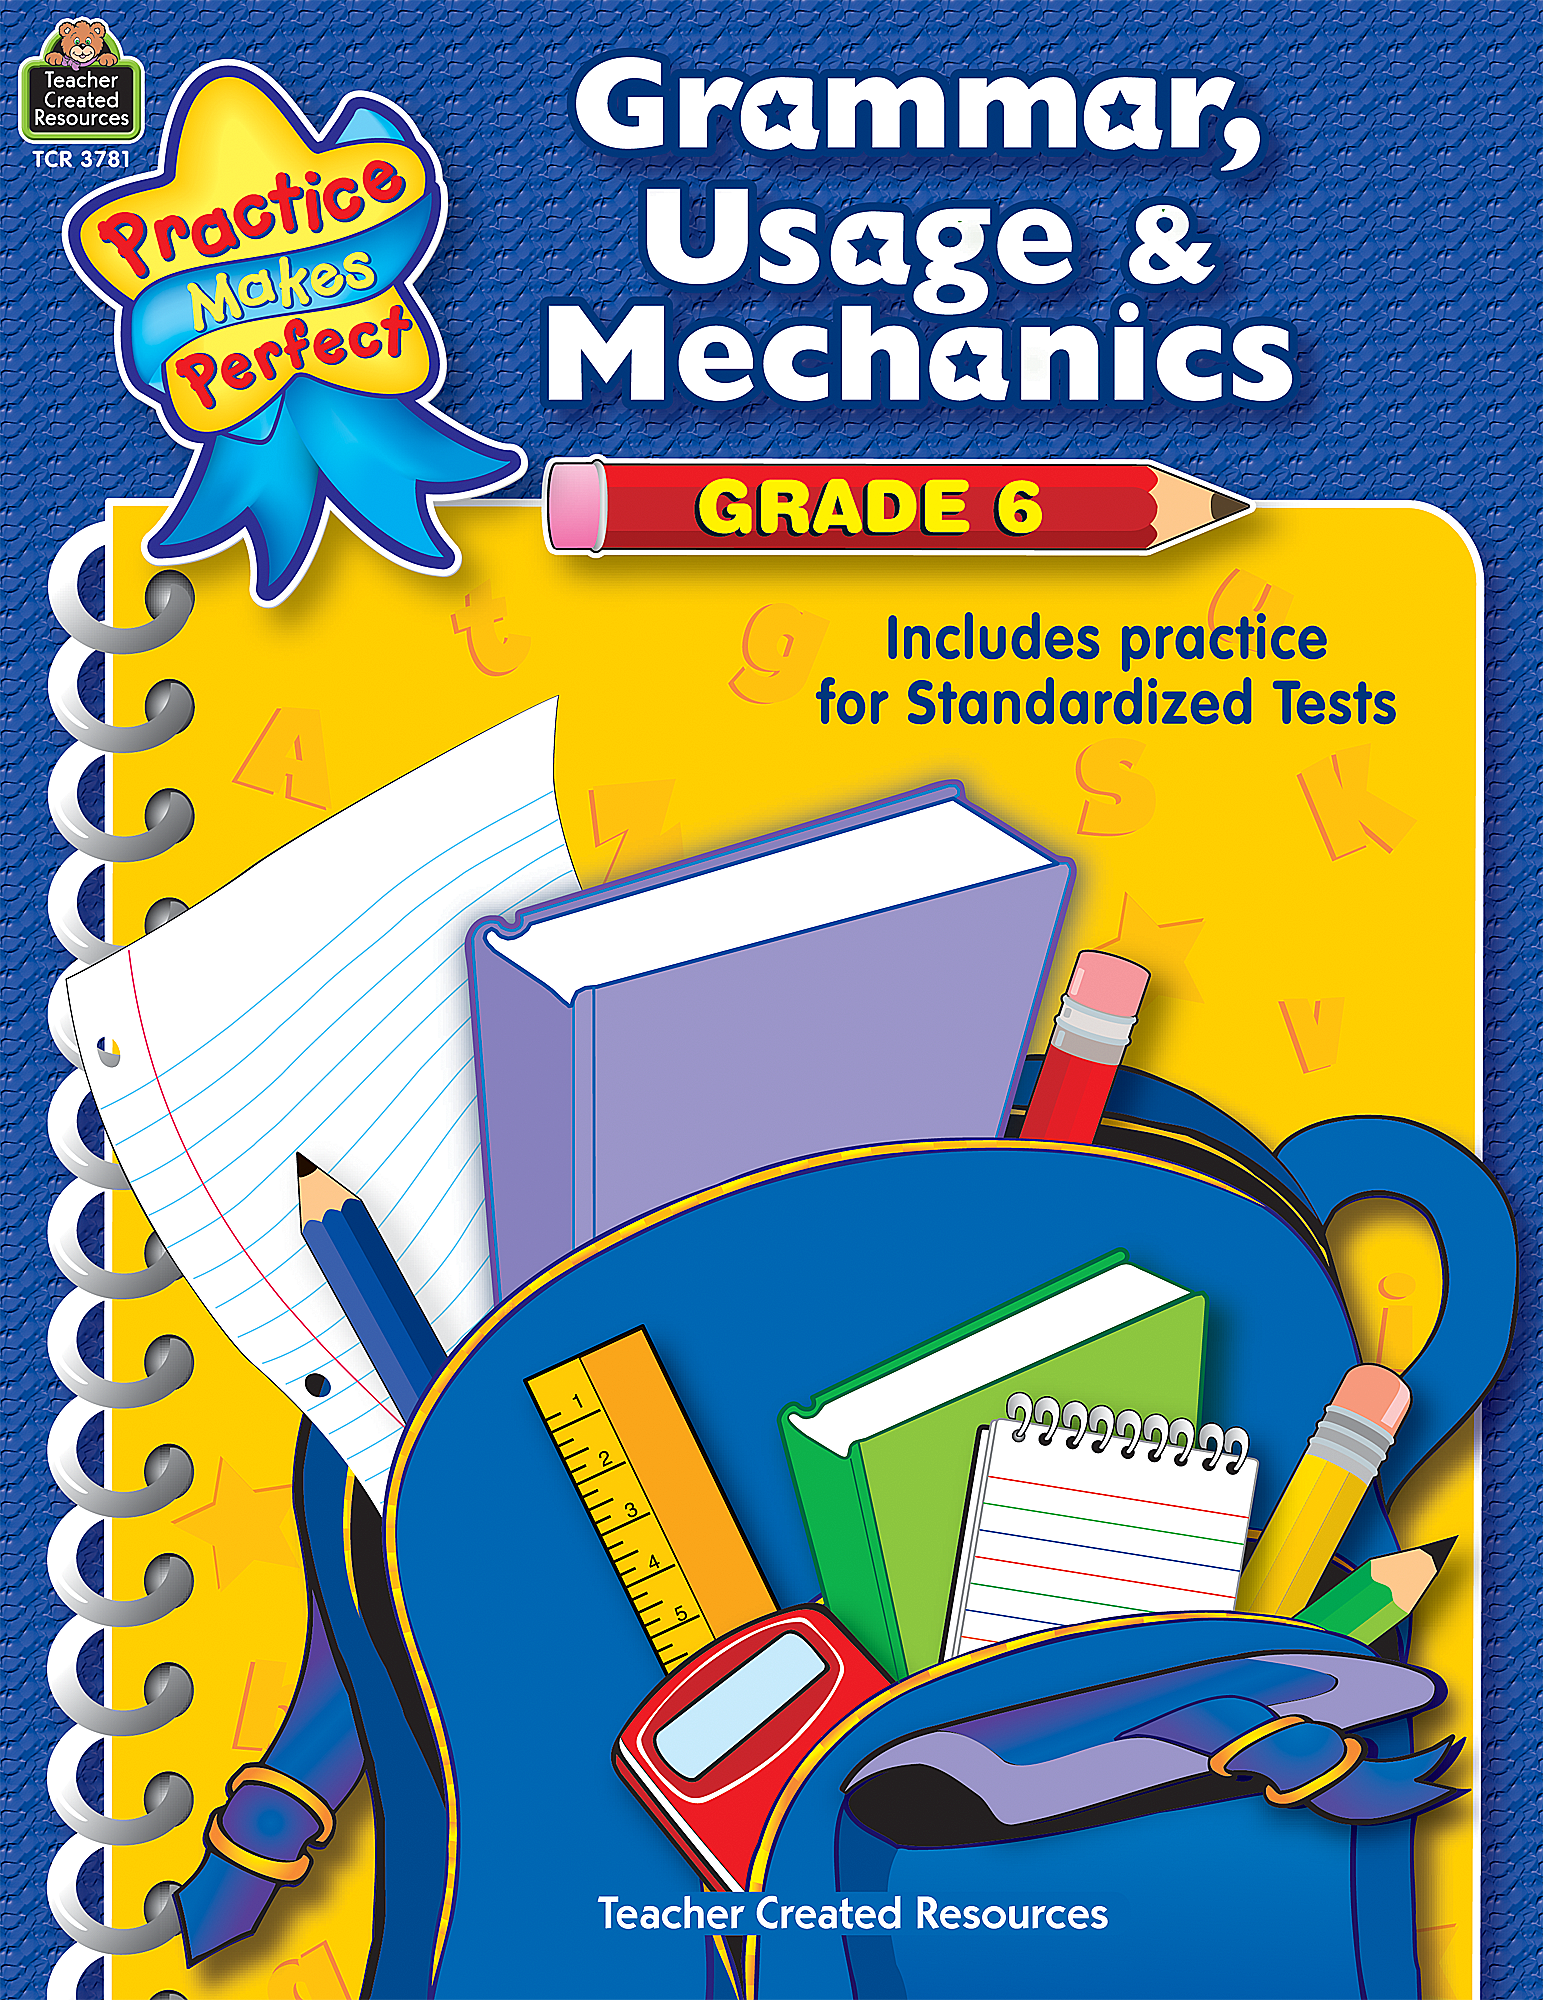 Grammar, Usage & Mechanics Grade 6 - TCR3781 | Teacher Created Resources